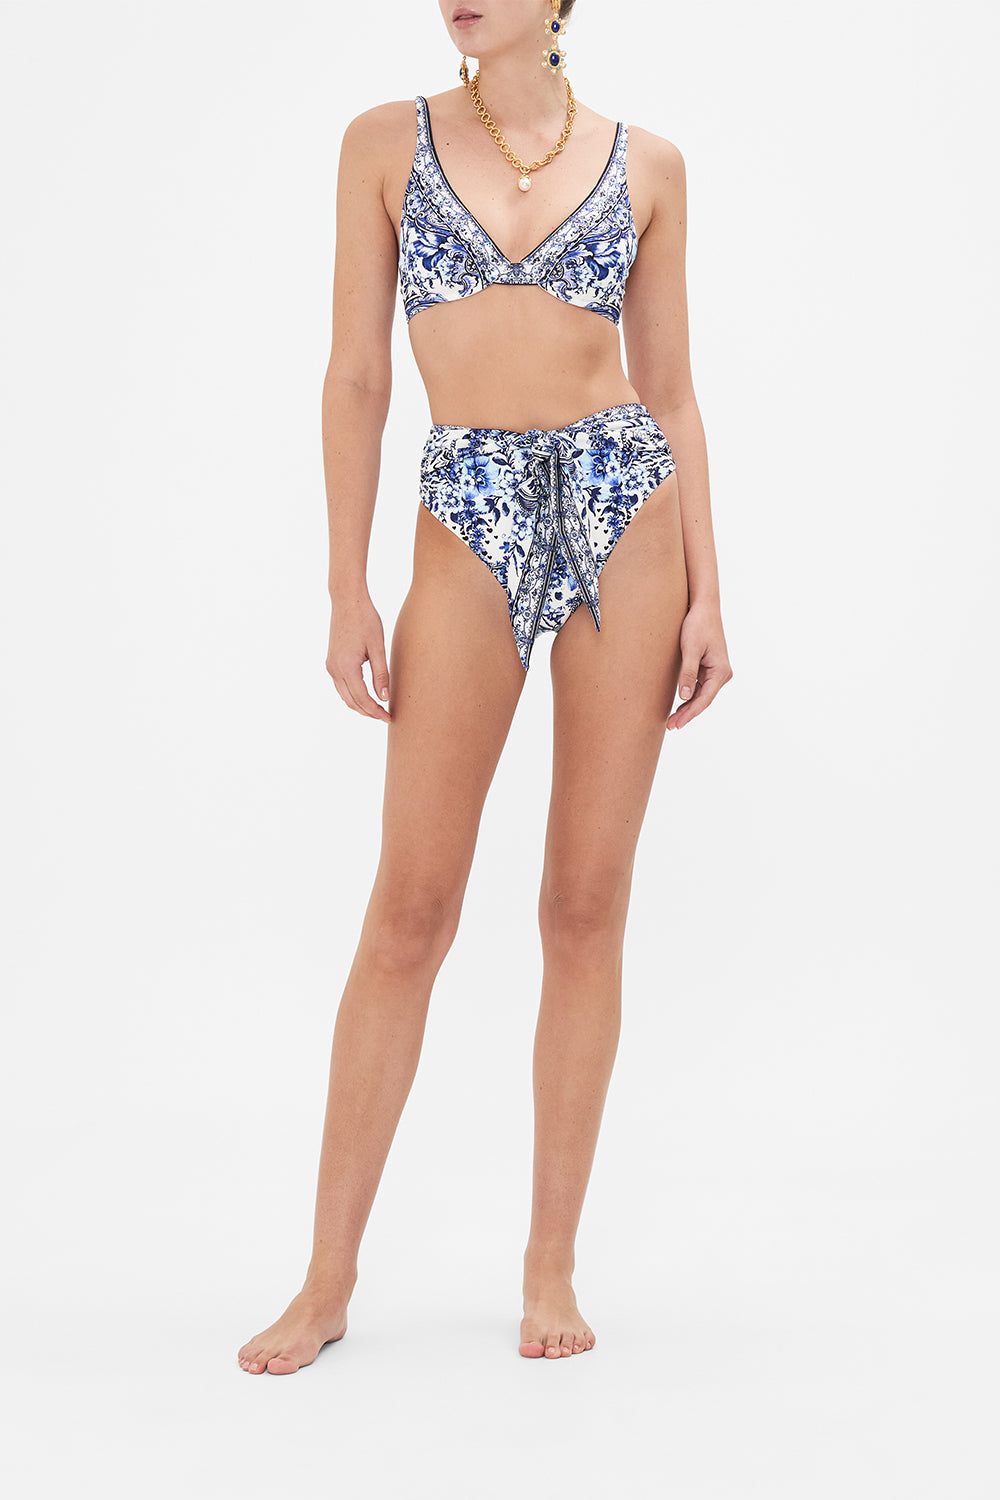 Front view of model wearing CAMILLA womens underwire bikini top in Glaze and Graze print